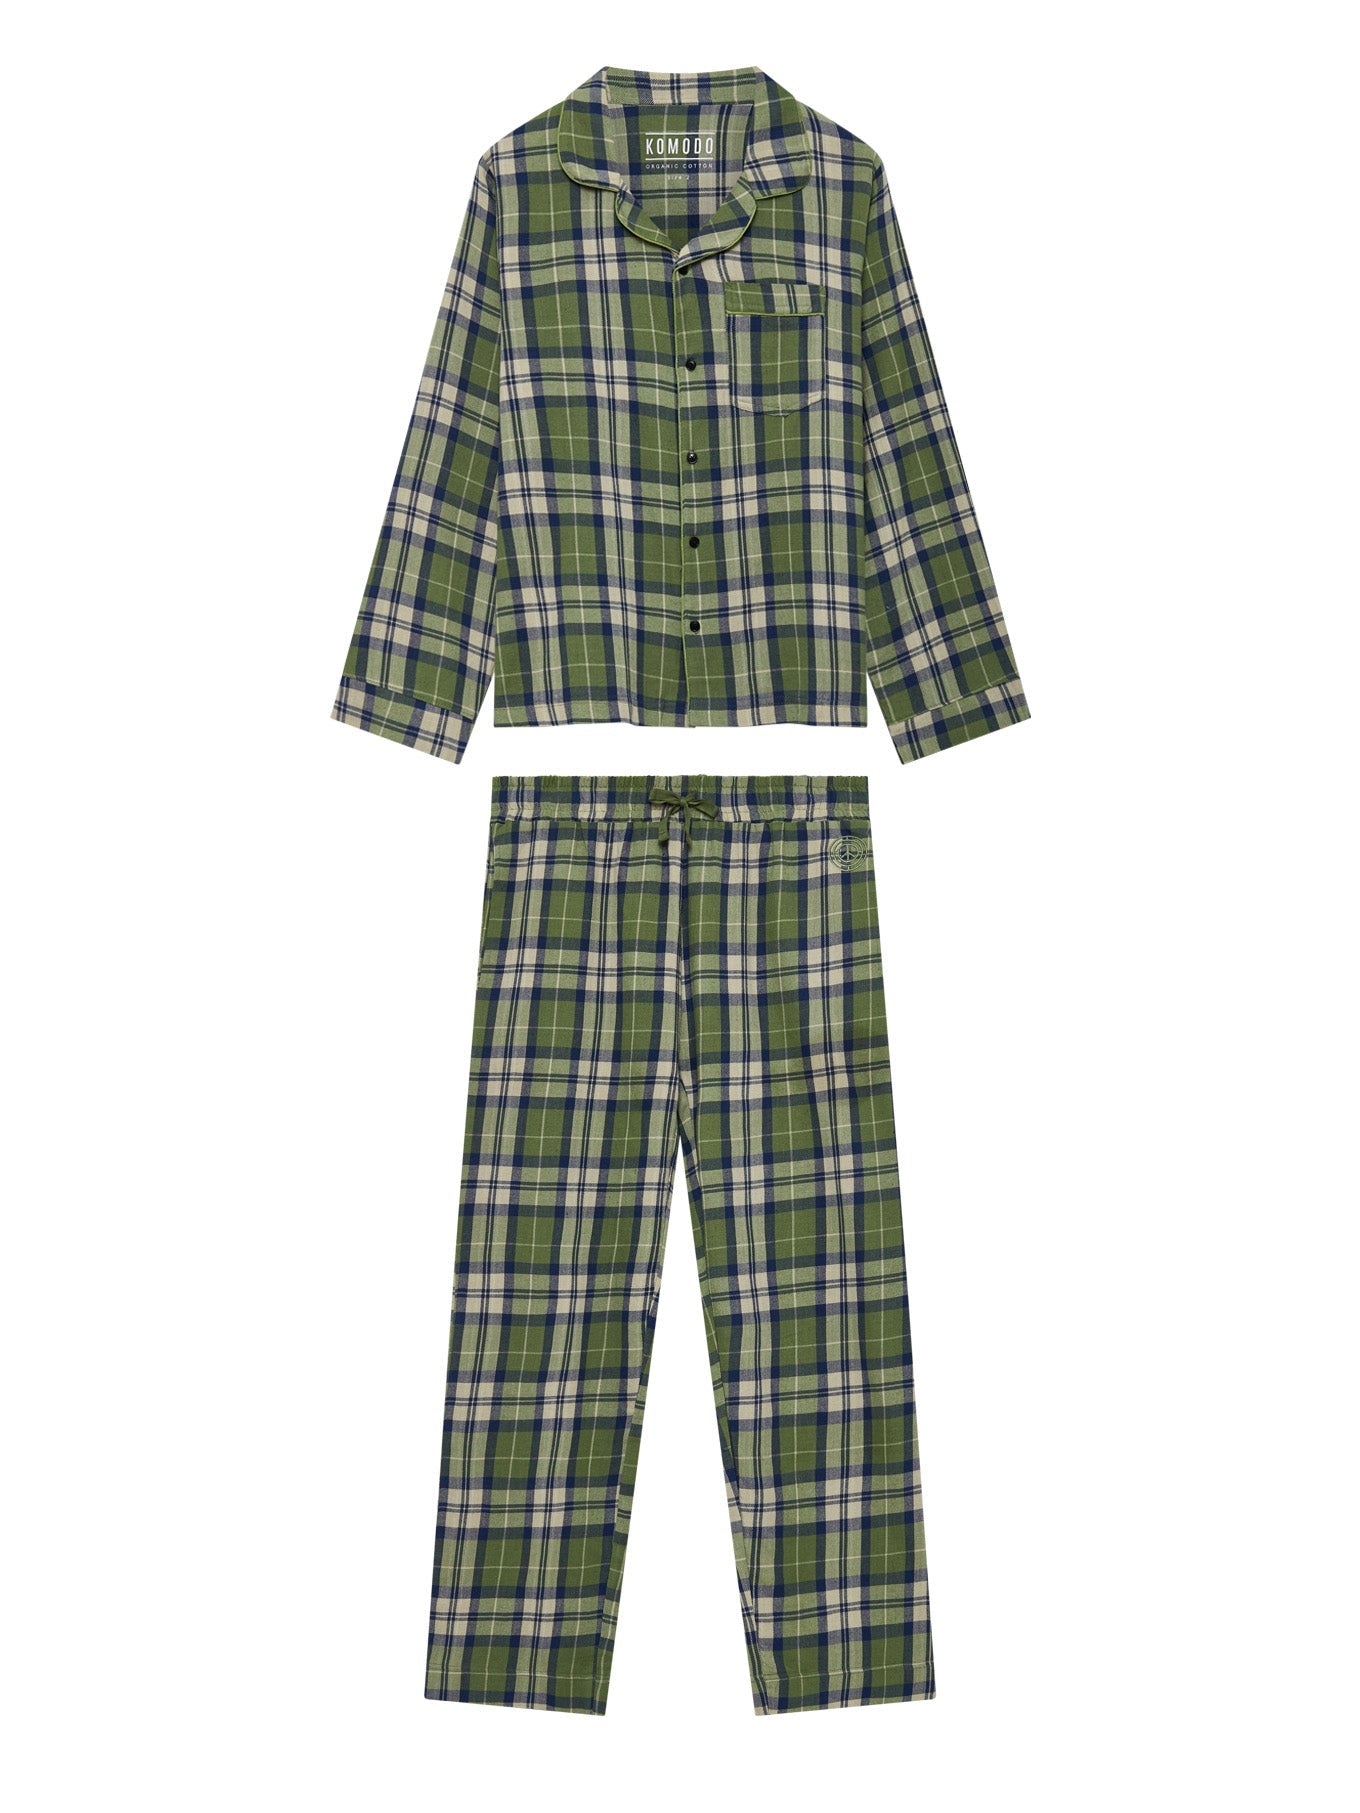 Grünes Pyjama-Set JIM JAM aus 100% Bio-Baumwolle von Komodo